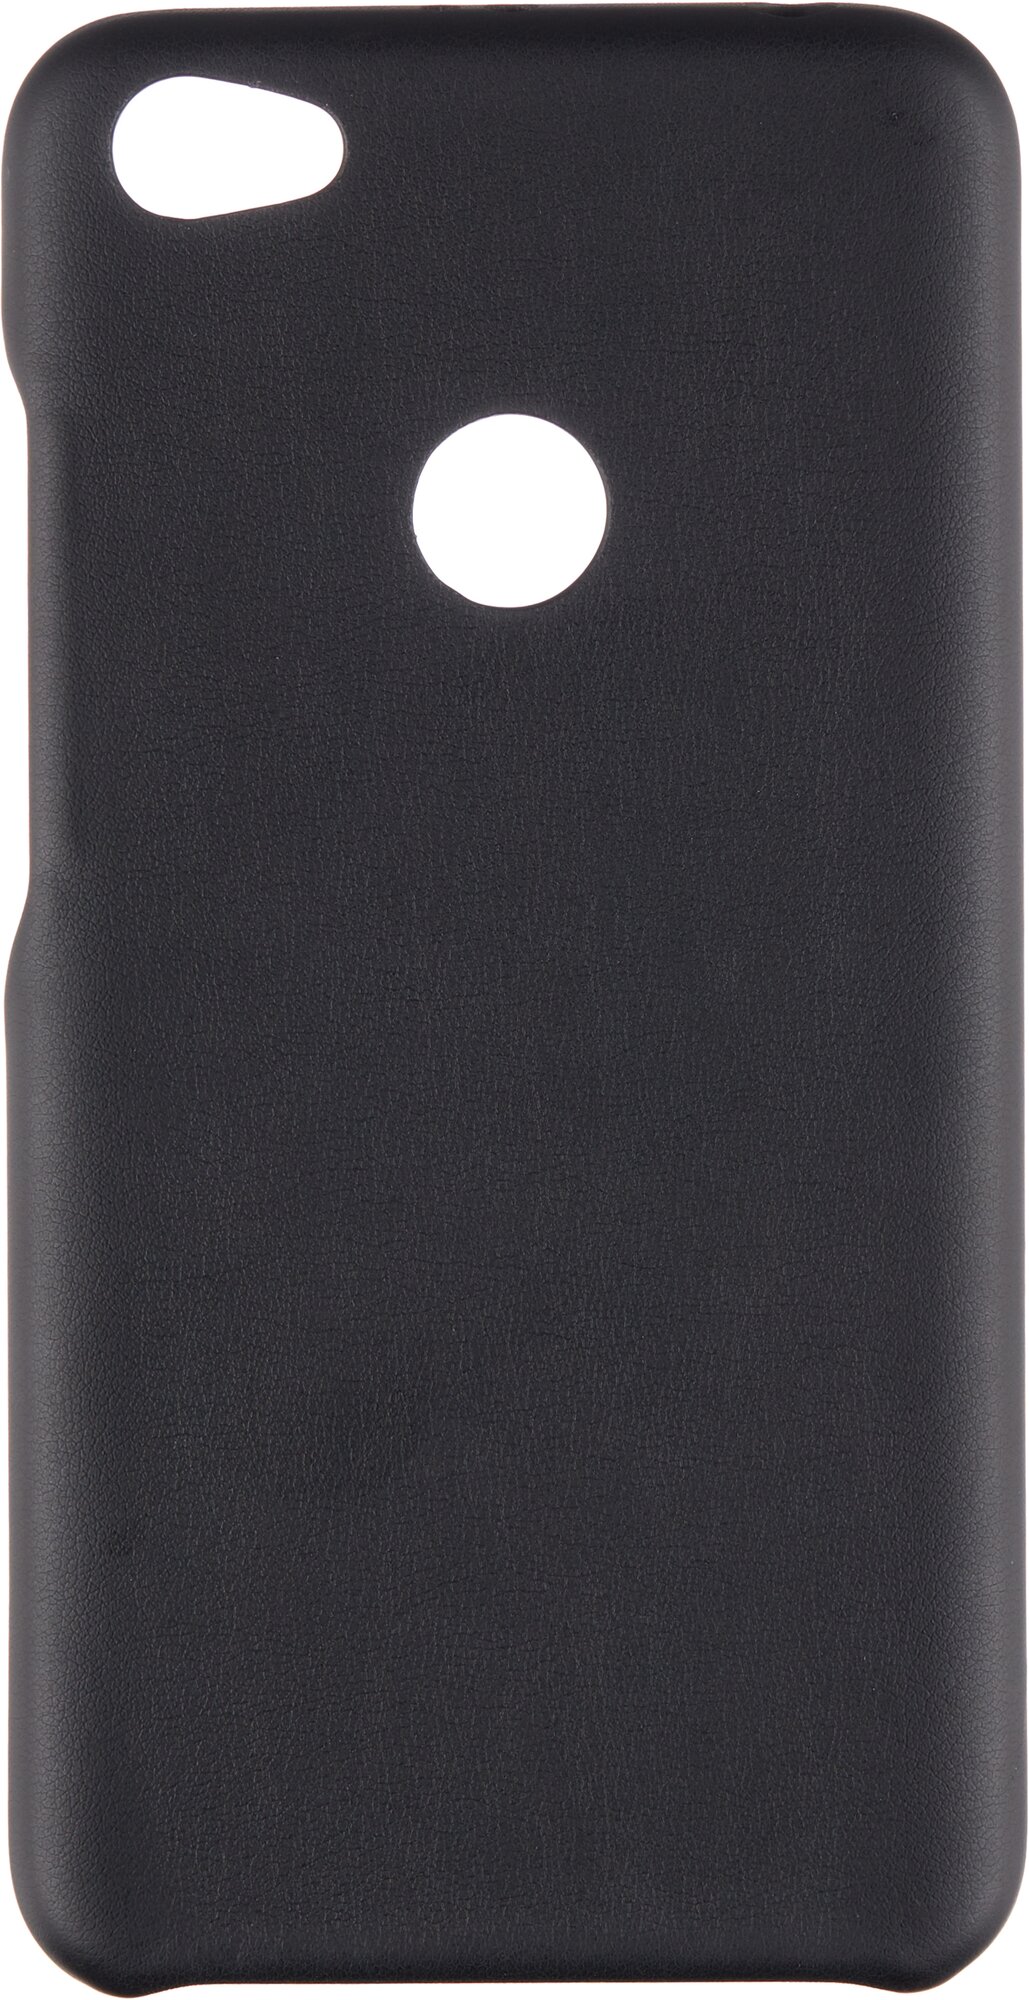 Чехол G-Case Slim Premium для Xiaomi Redmi Note 5A